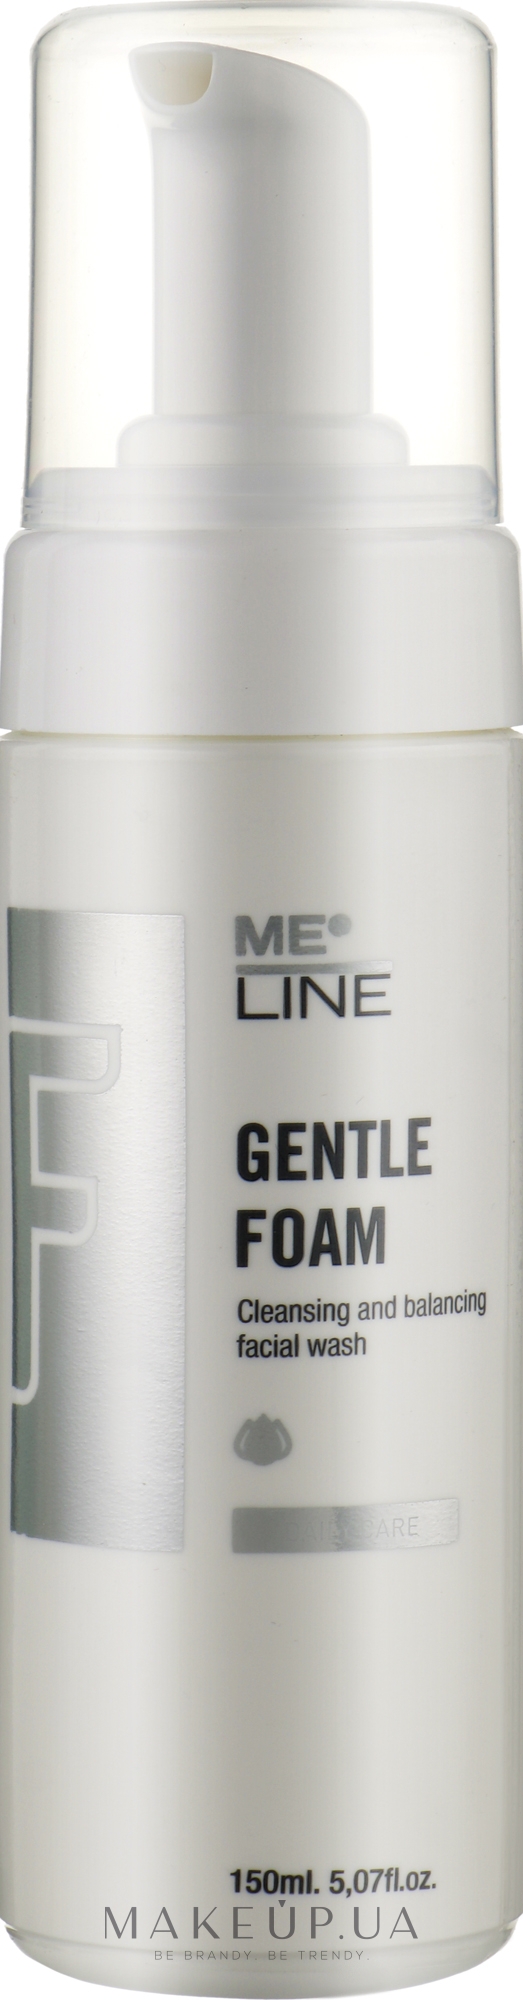 Очищающая пена для лица - Me Line Gentle Foam  — фото 150ml